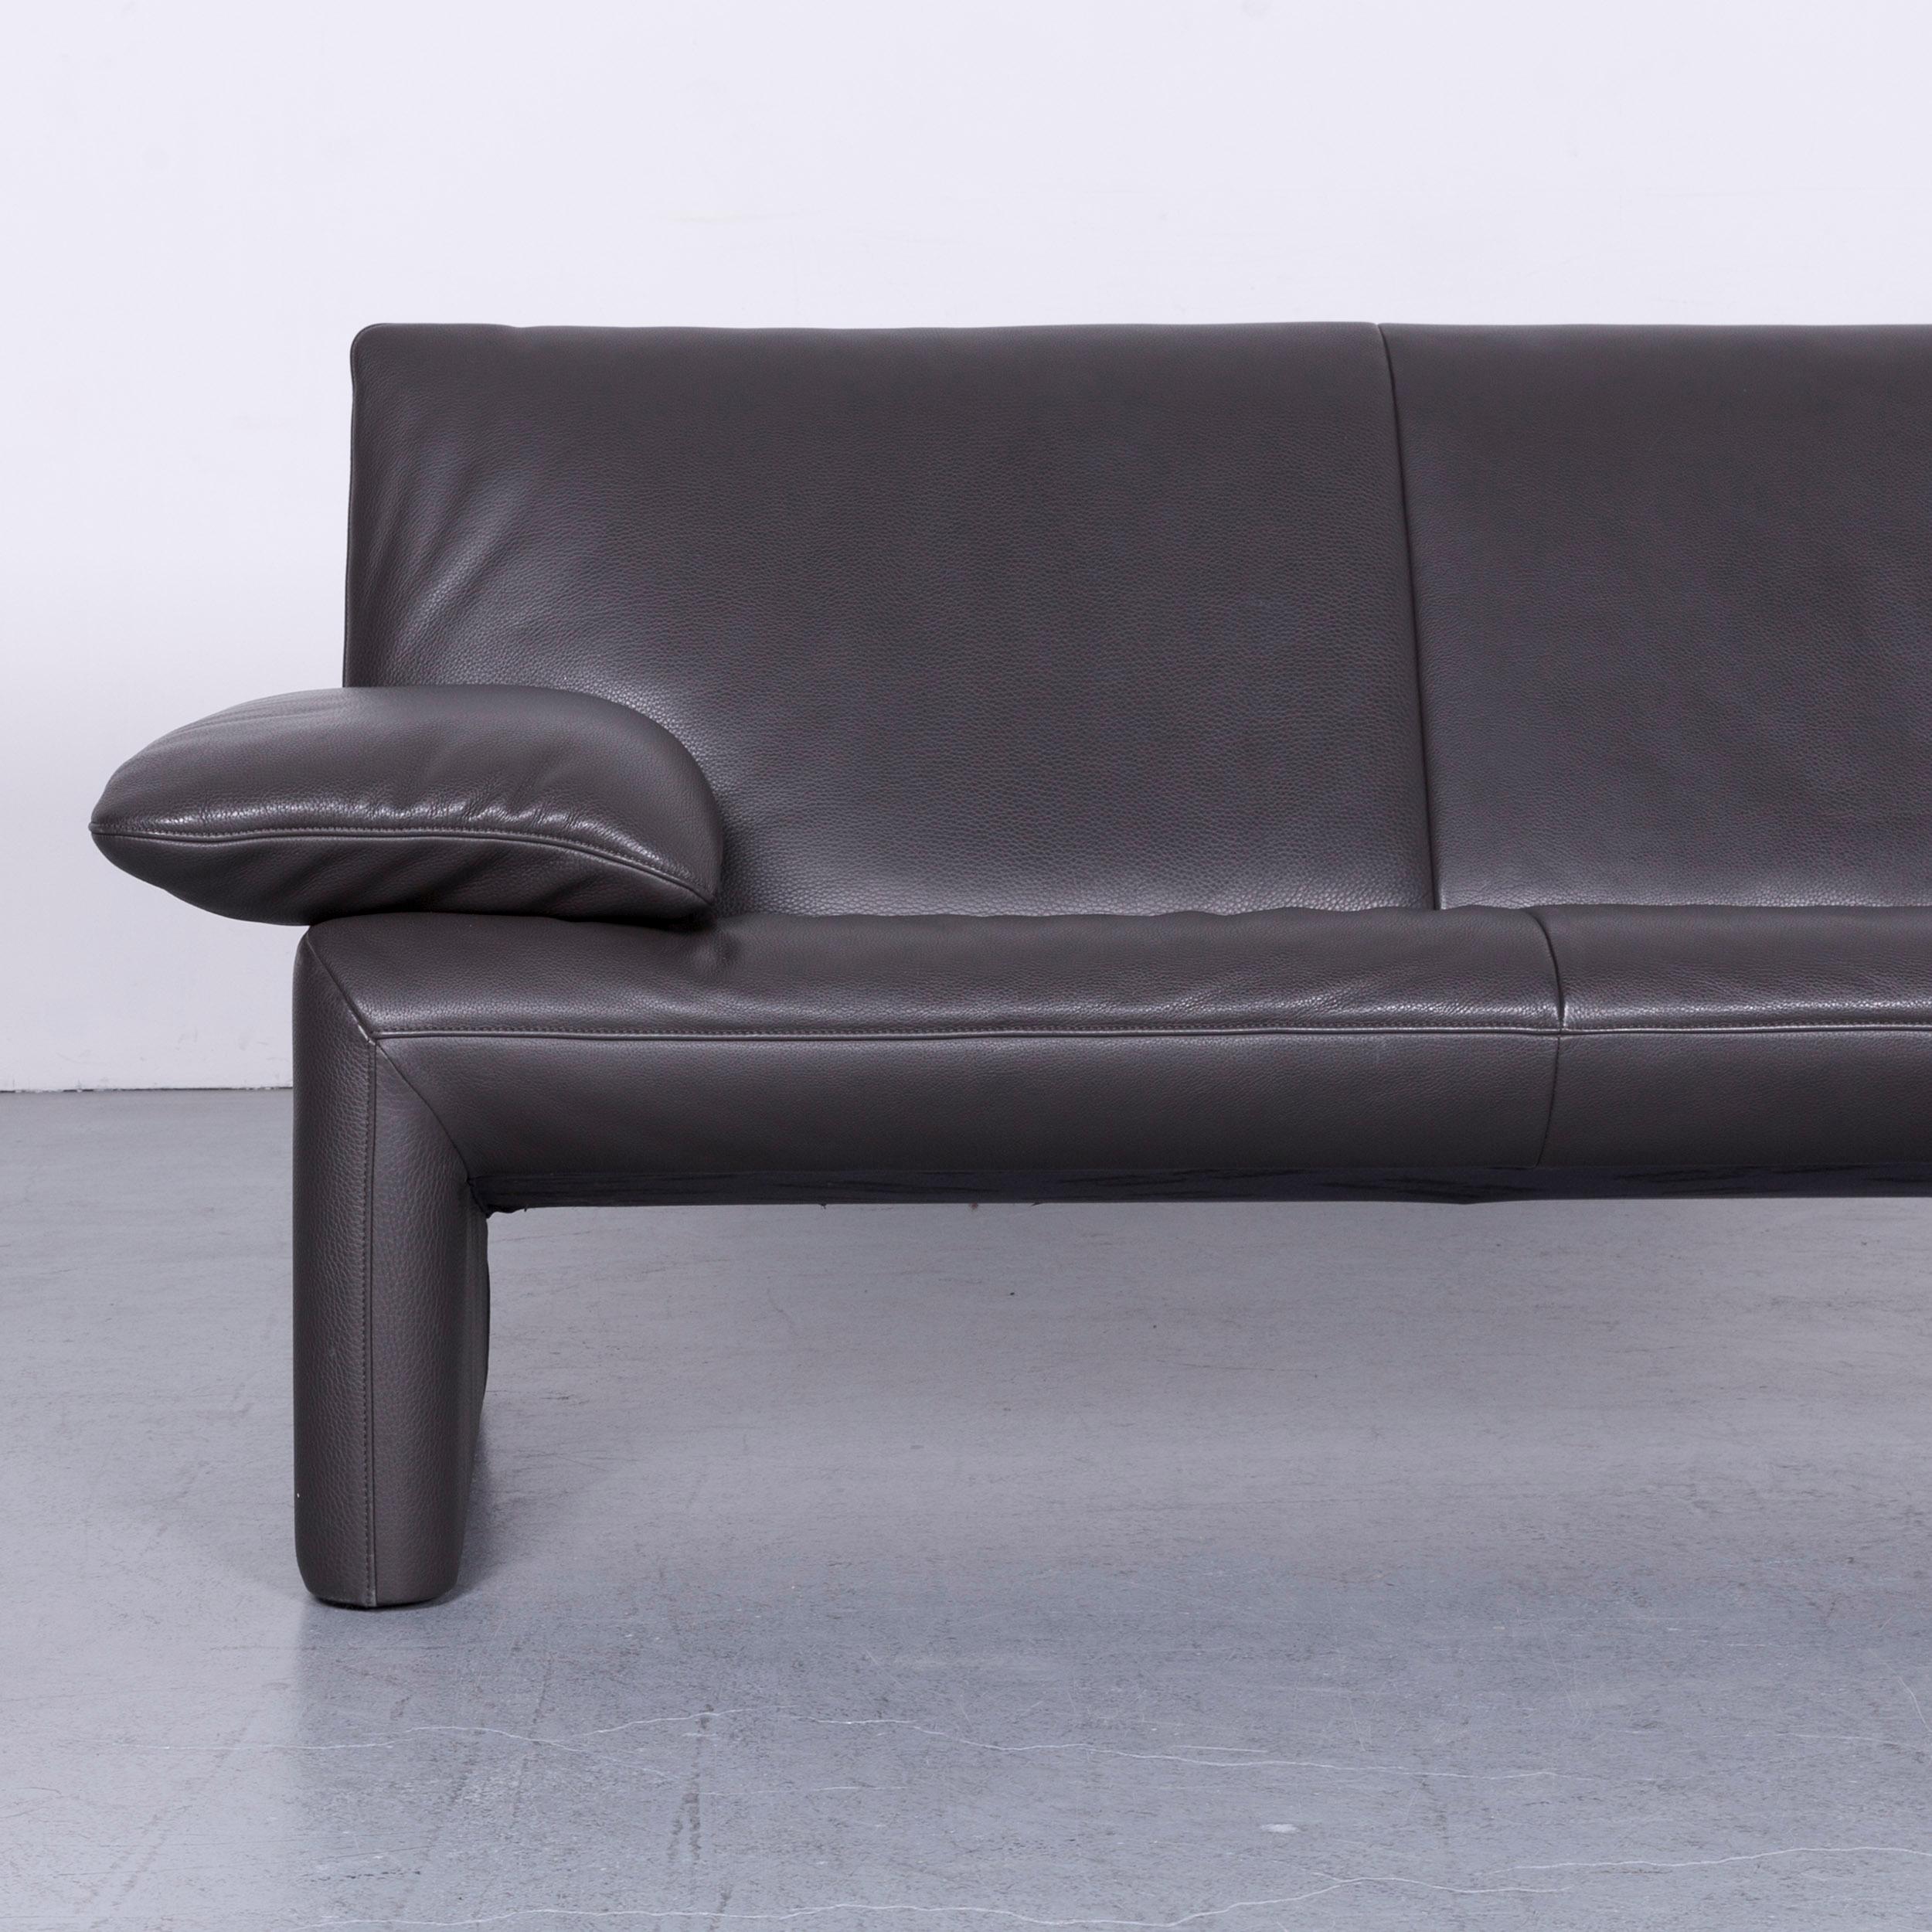 Belgian Jori Linea Designer Leather Sofa Foot-Stool Set Grey Two-Seat Couch 